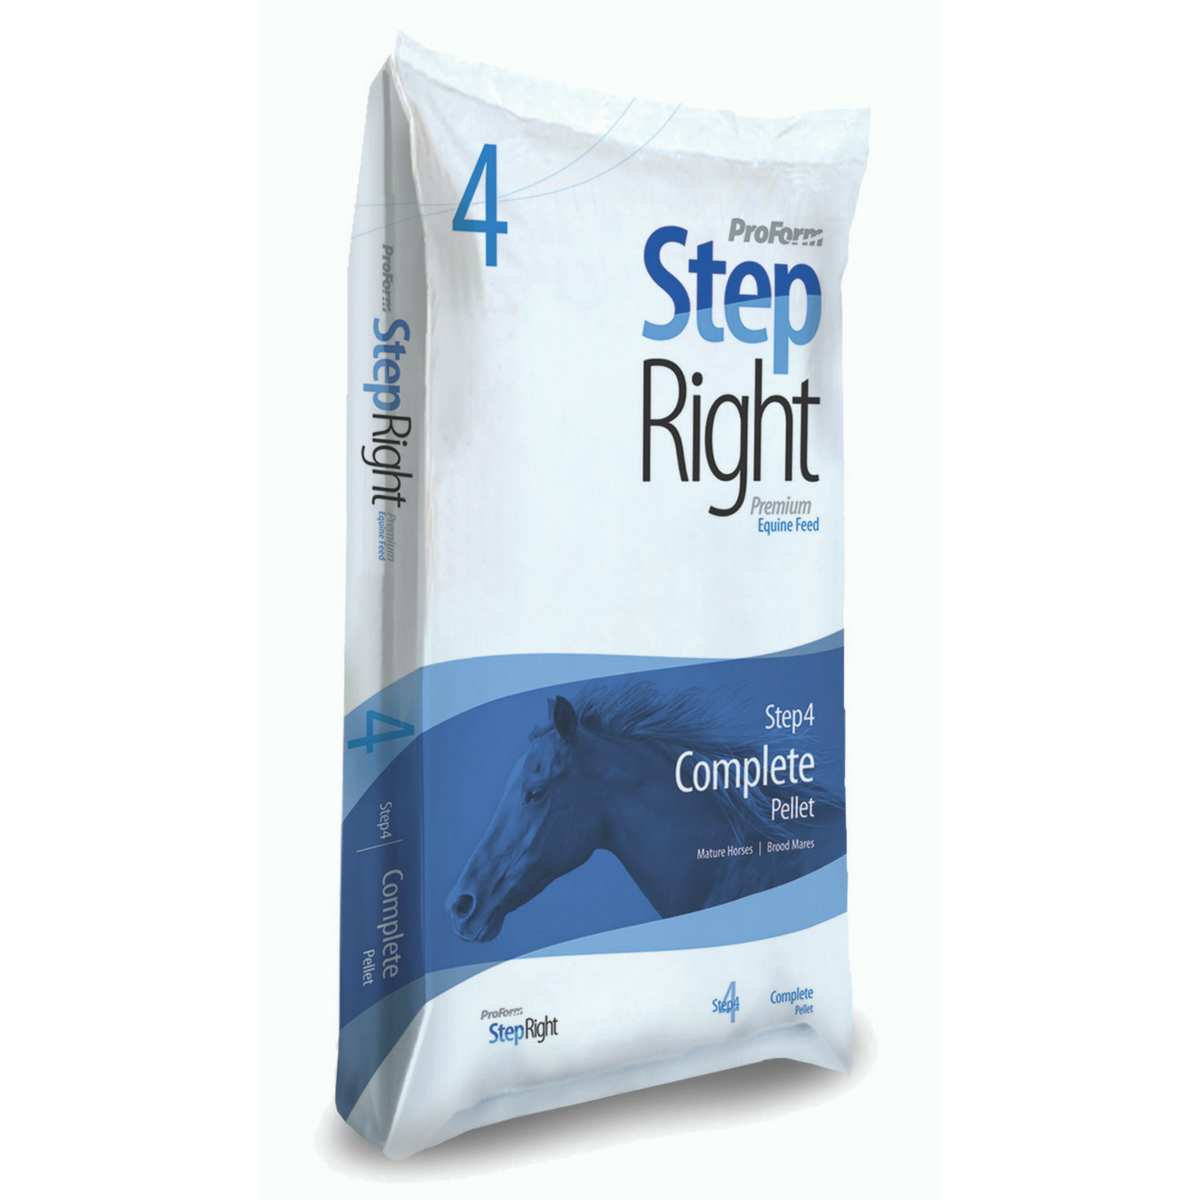 Step Right Premium Equine Feed - Step 4 - Complete Pellet  - 20 kg